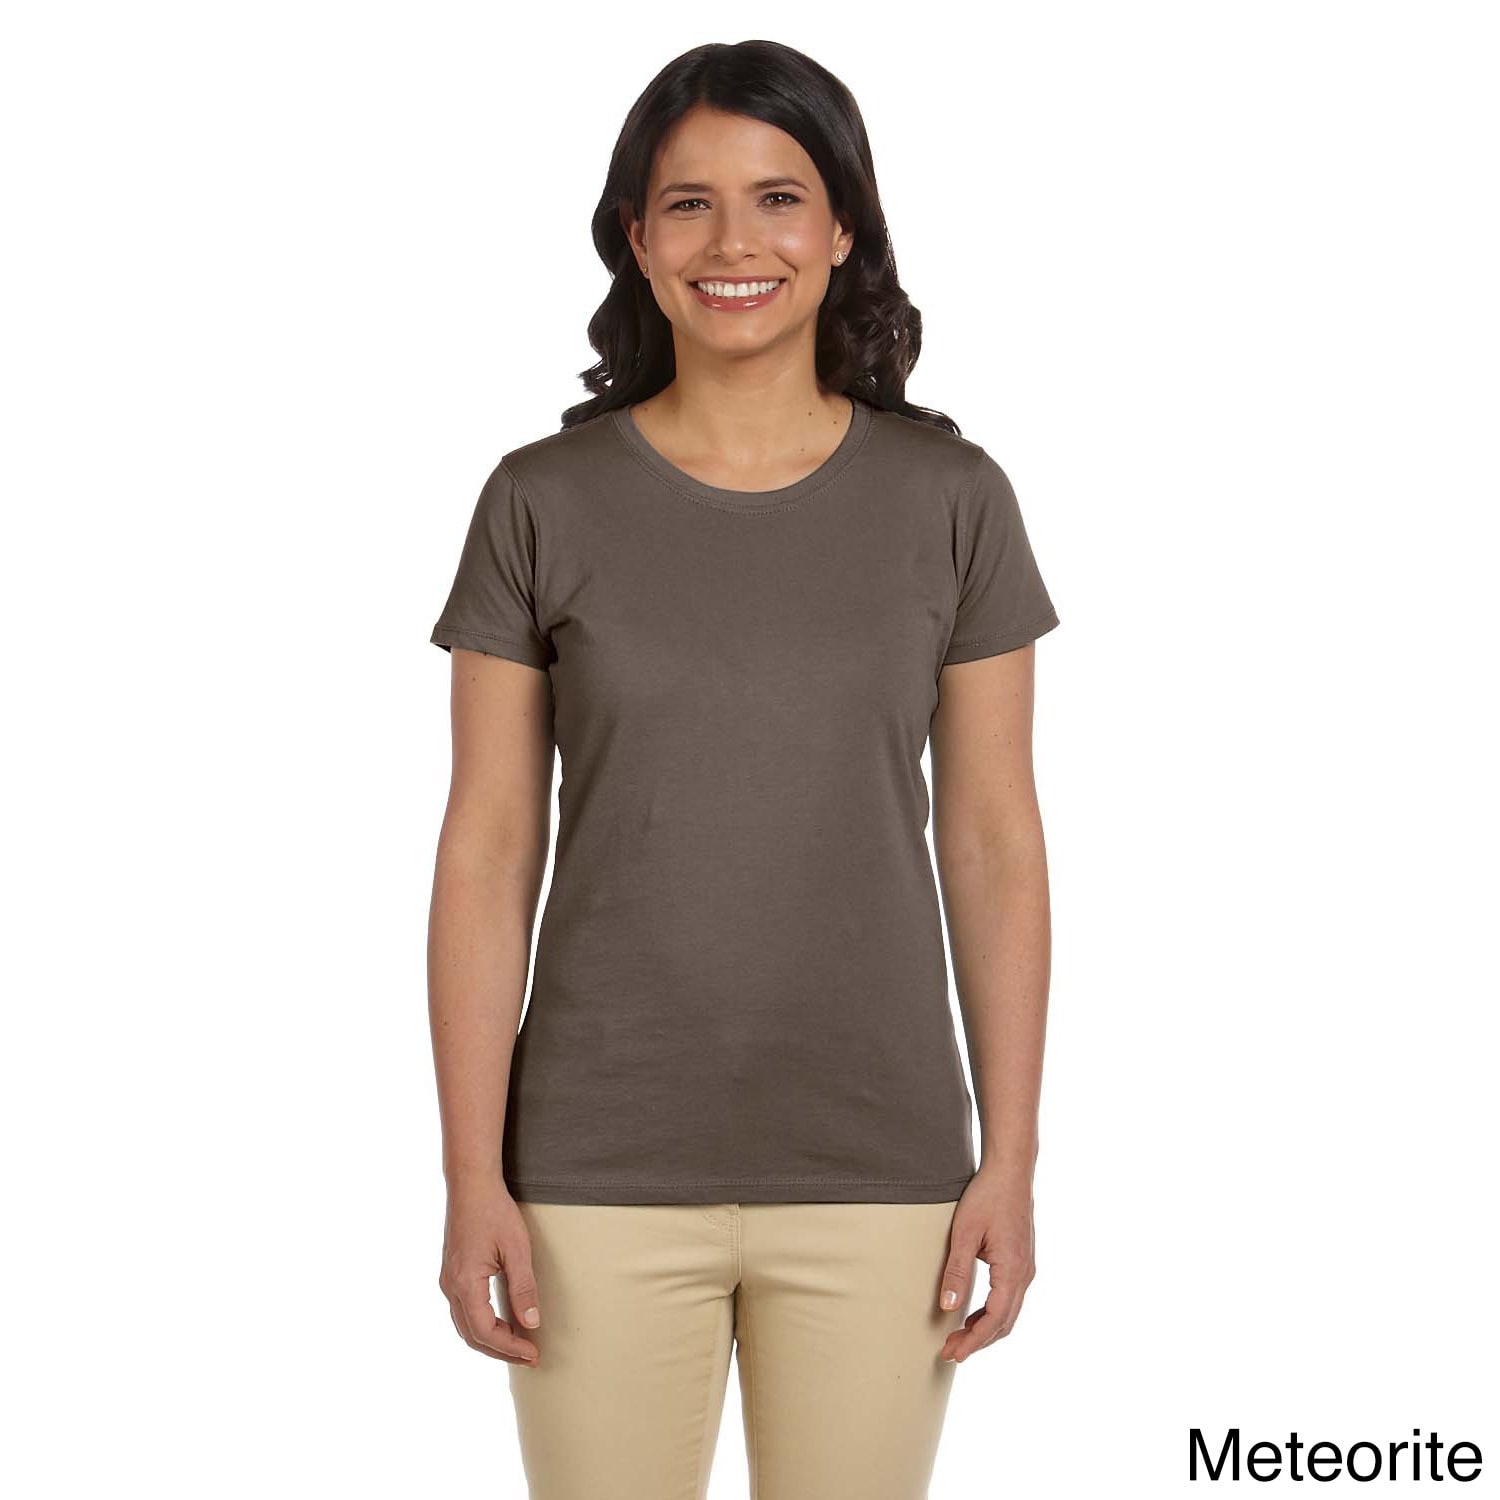 Econscious Womens Organic Cotton Classic Short Sleeve T shirt Beige Size XXL (18)